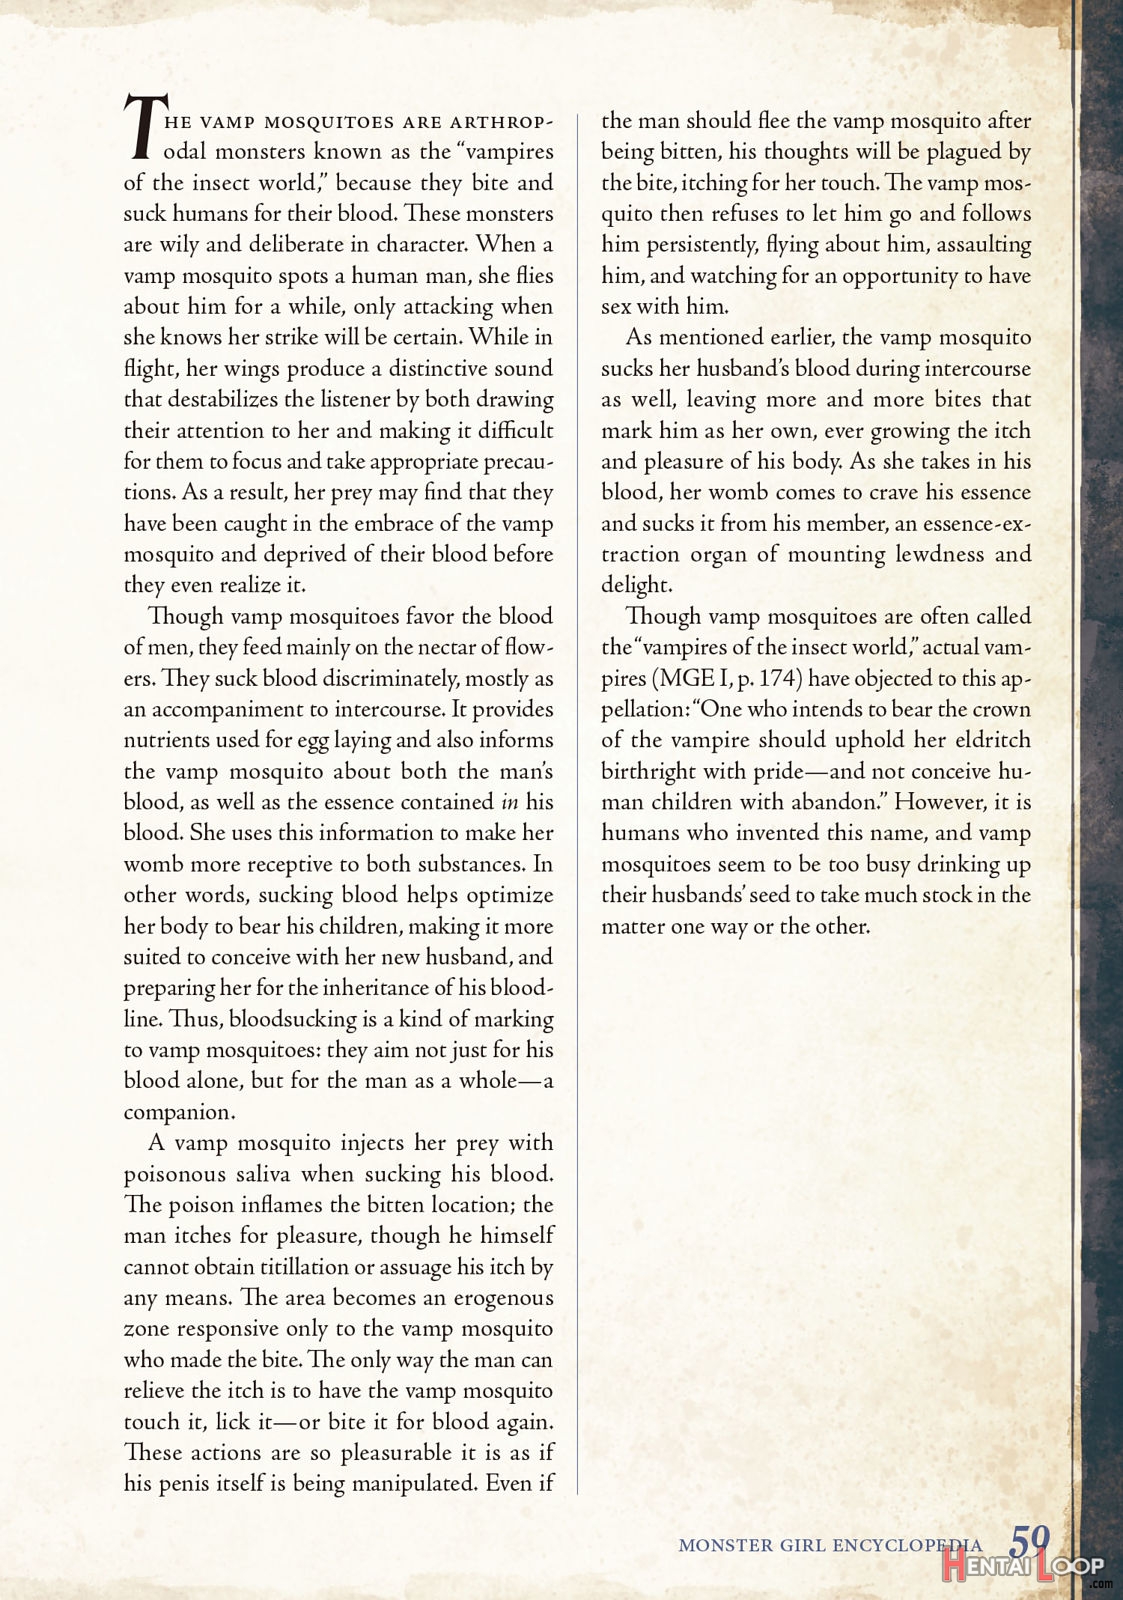 Monster Girl Encyclopedia Vol. 2 page 60